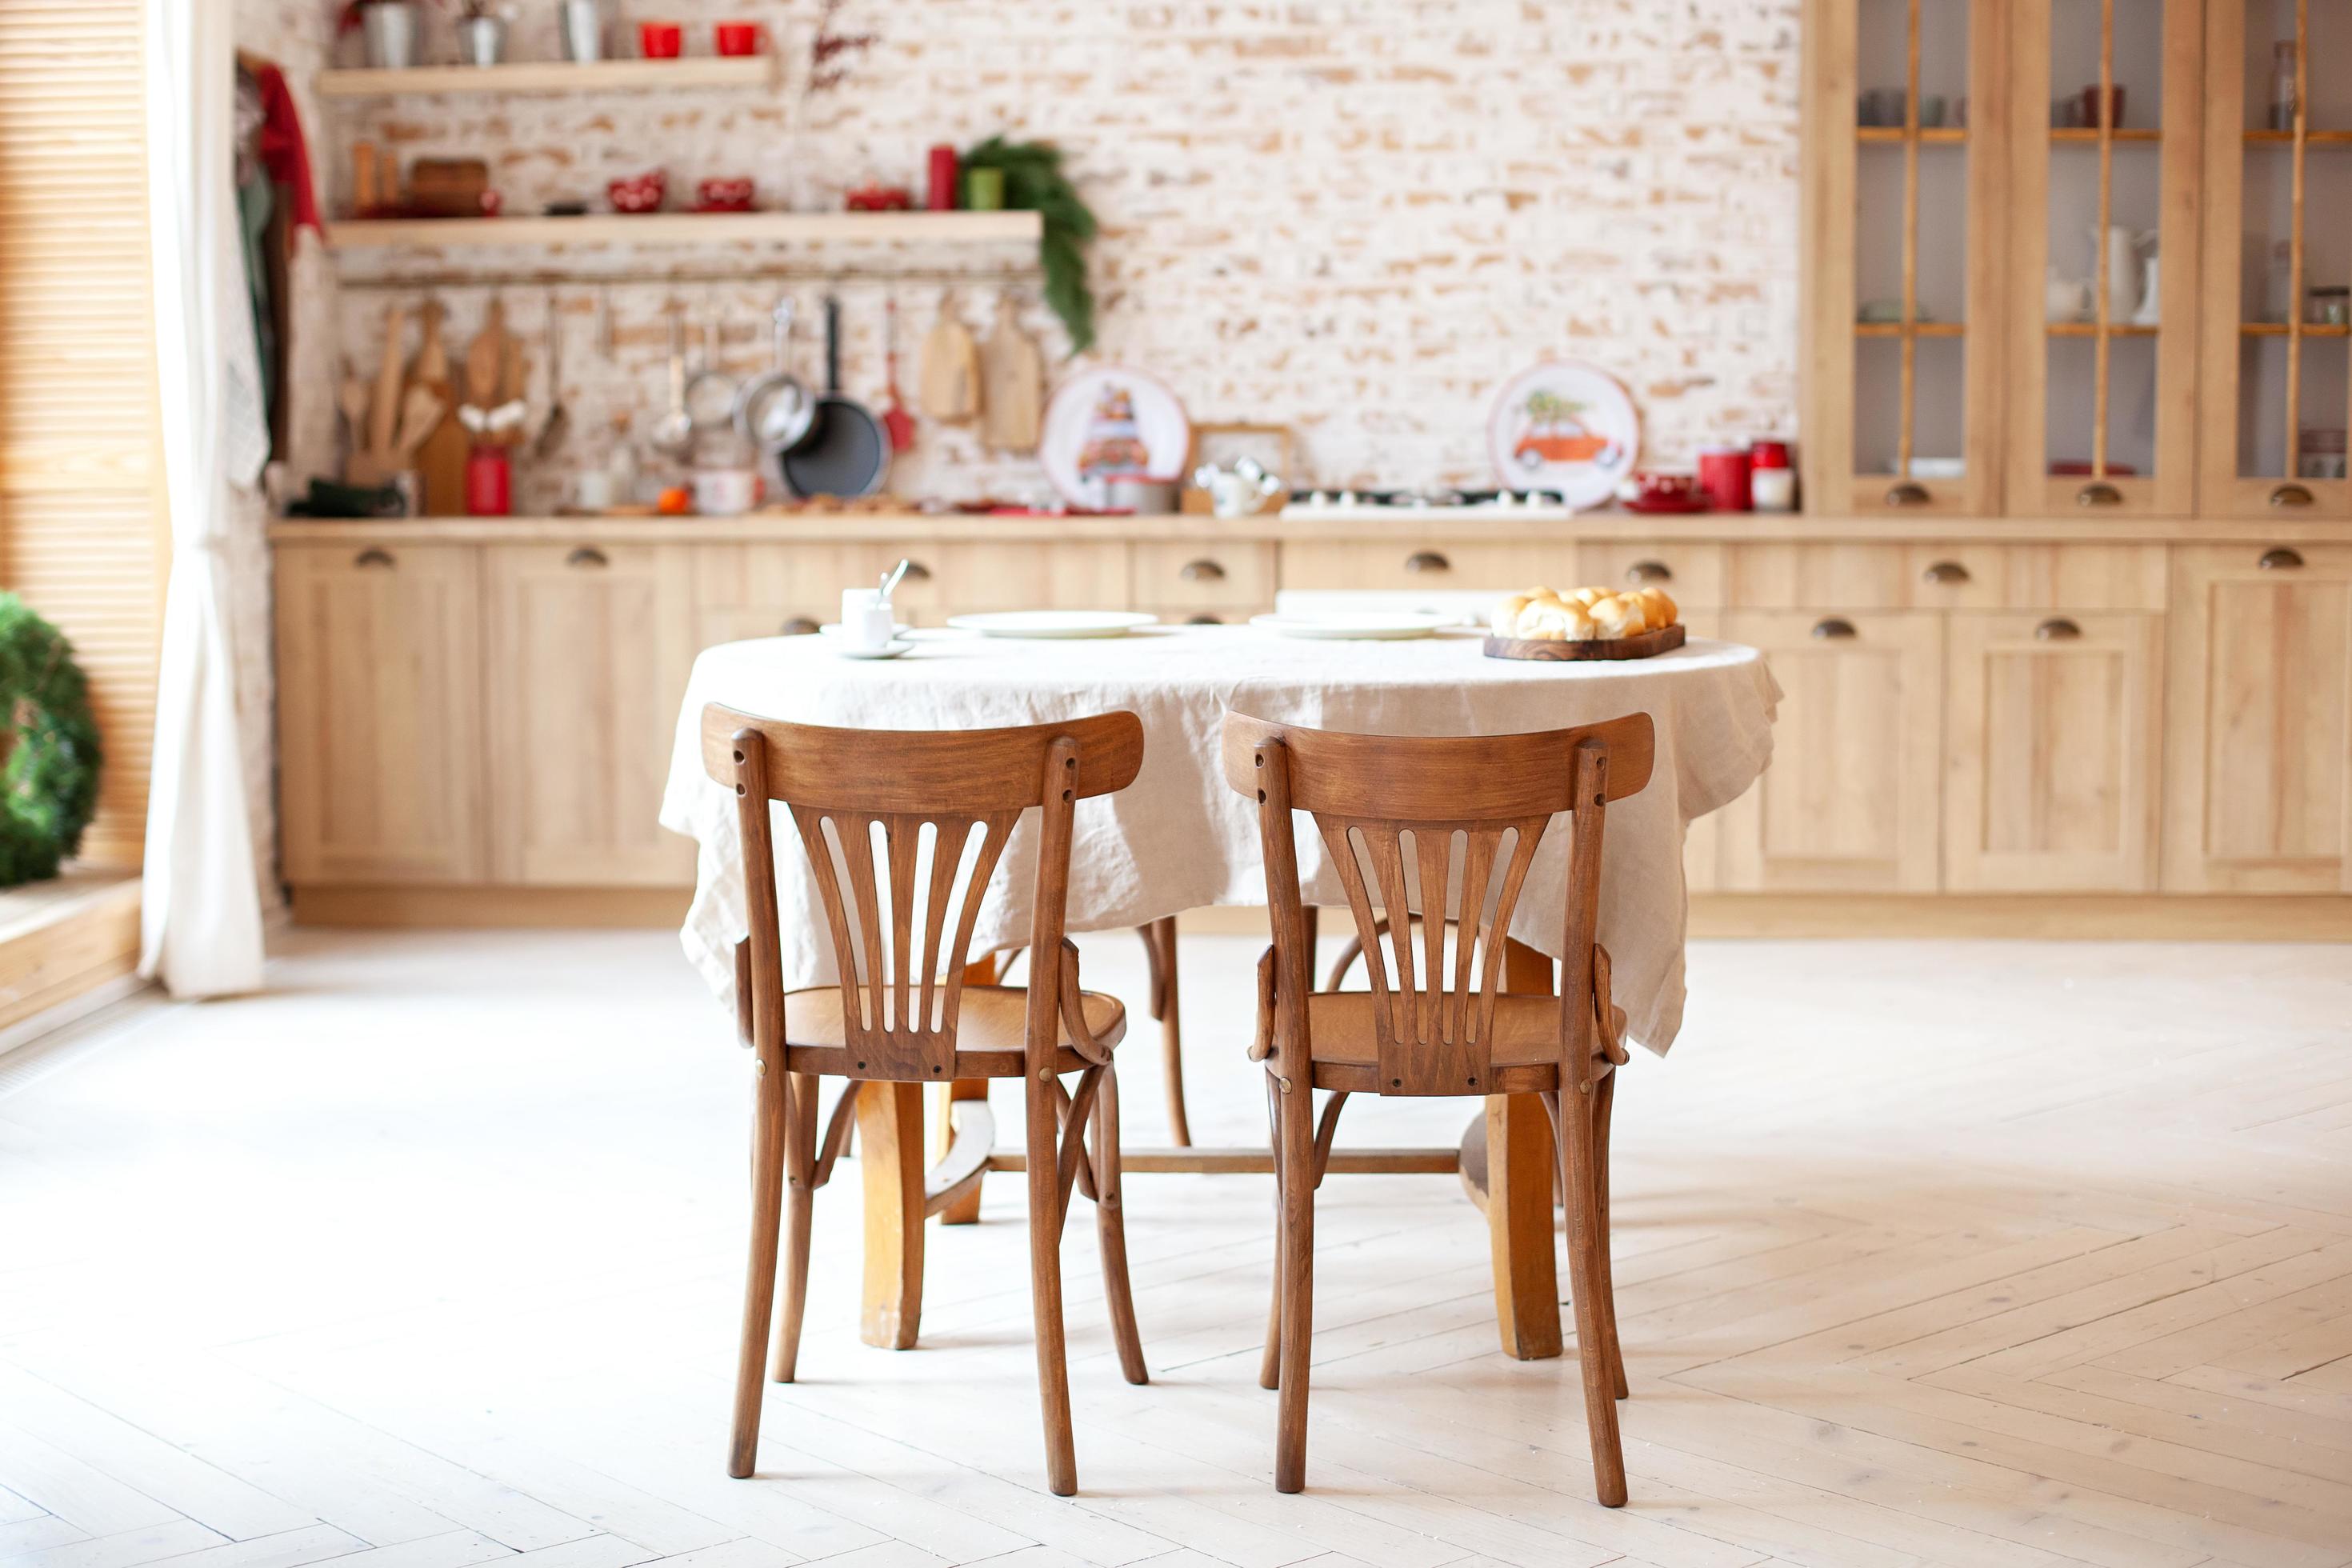 elegante cucina interna con tavolo e sedie in legno 1223104 Stock Photo su  Vecteezy